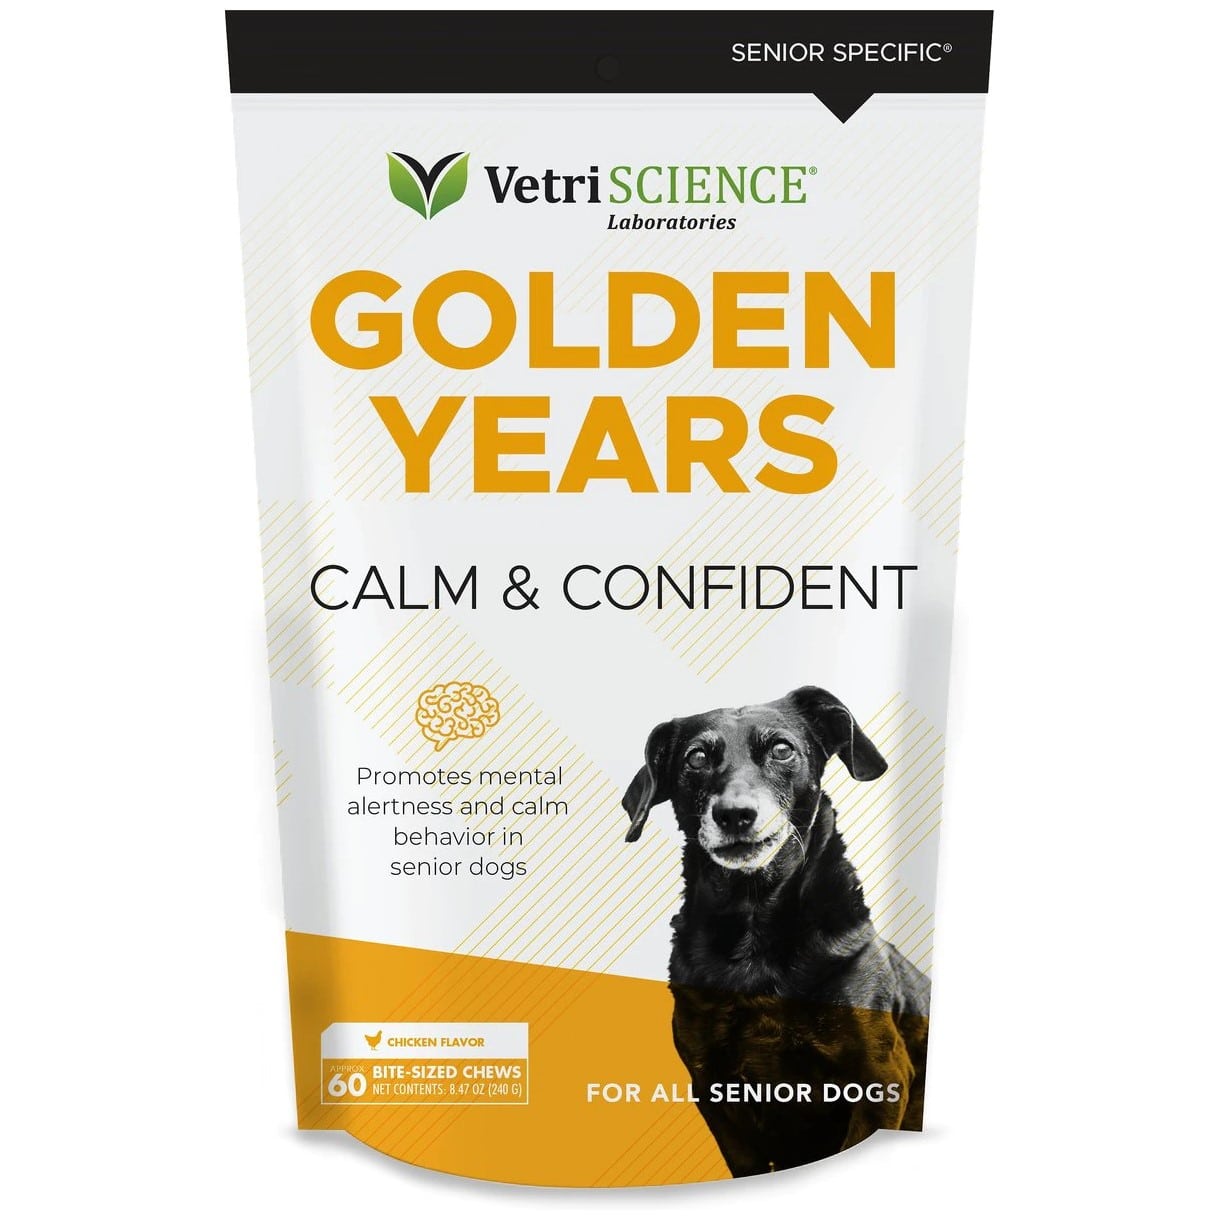 VetriScience Golden Years Chicken Flavor Calm & Confident Behavior Support Chew Supplement for Senior Dogs